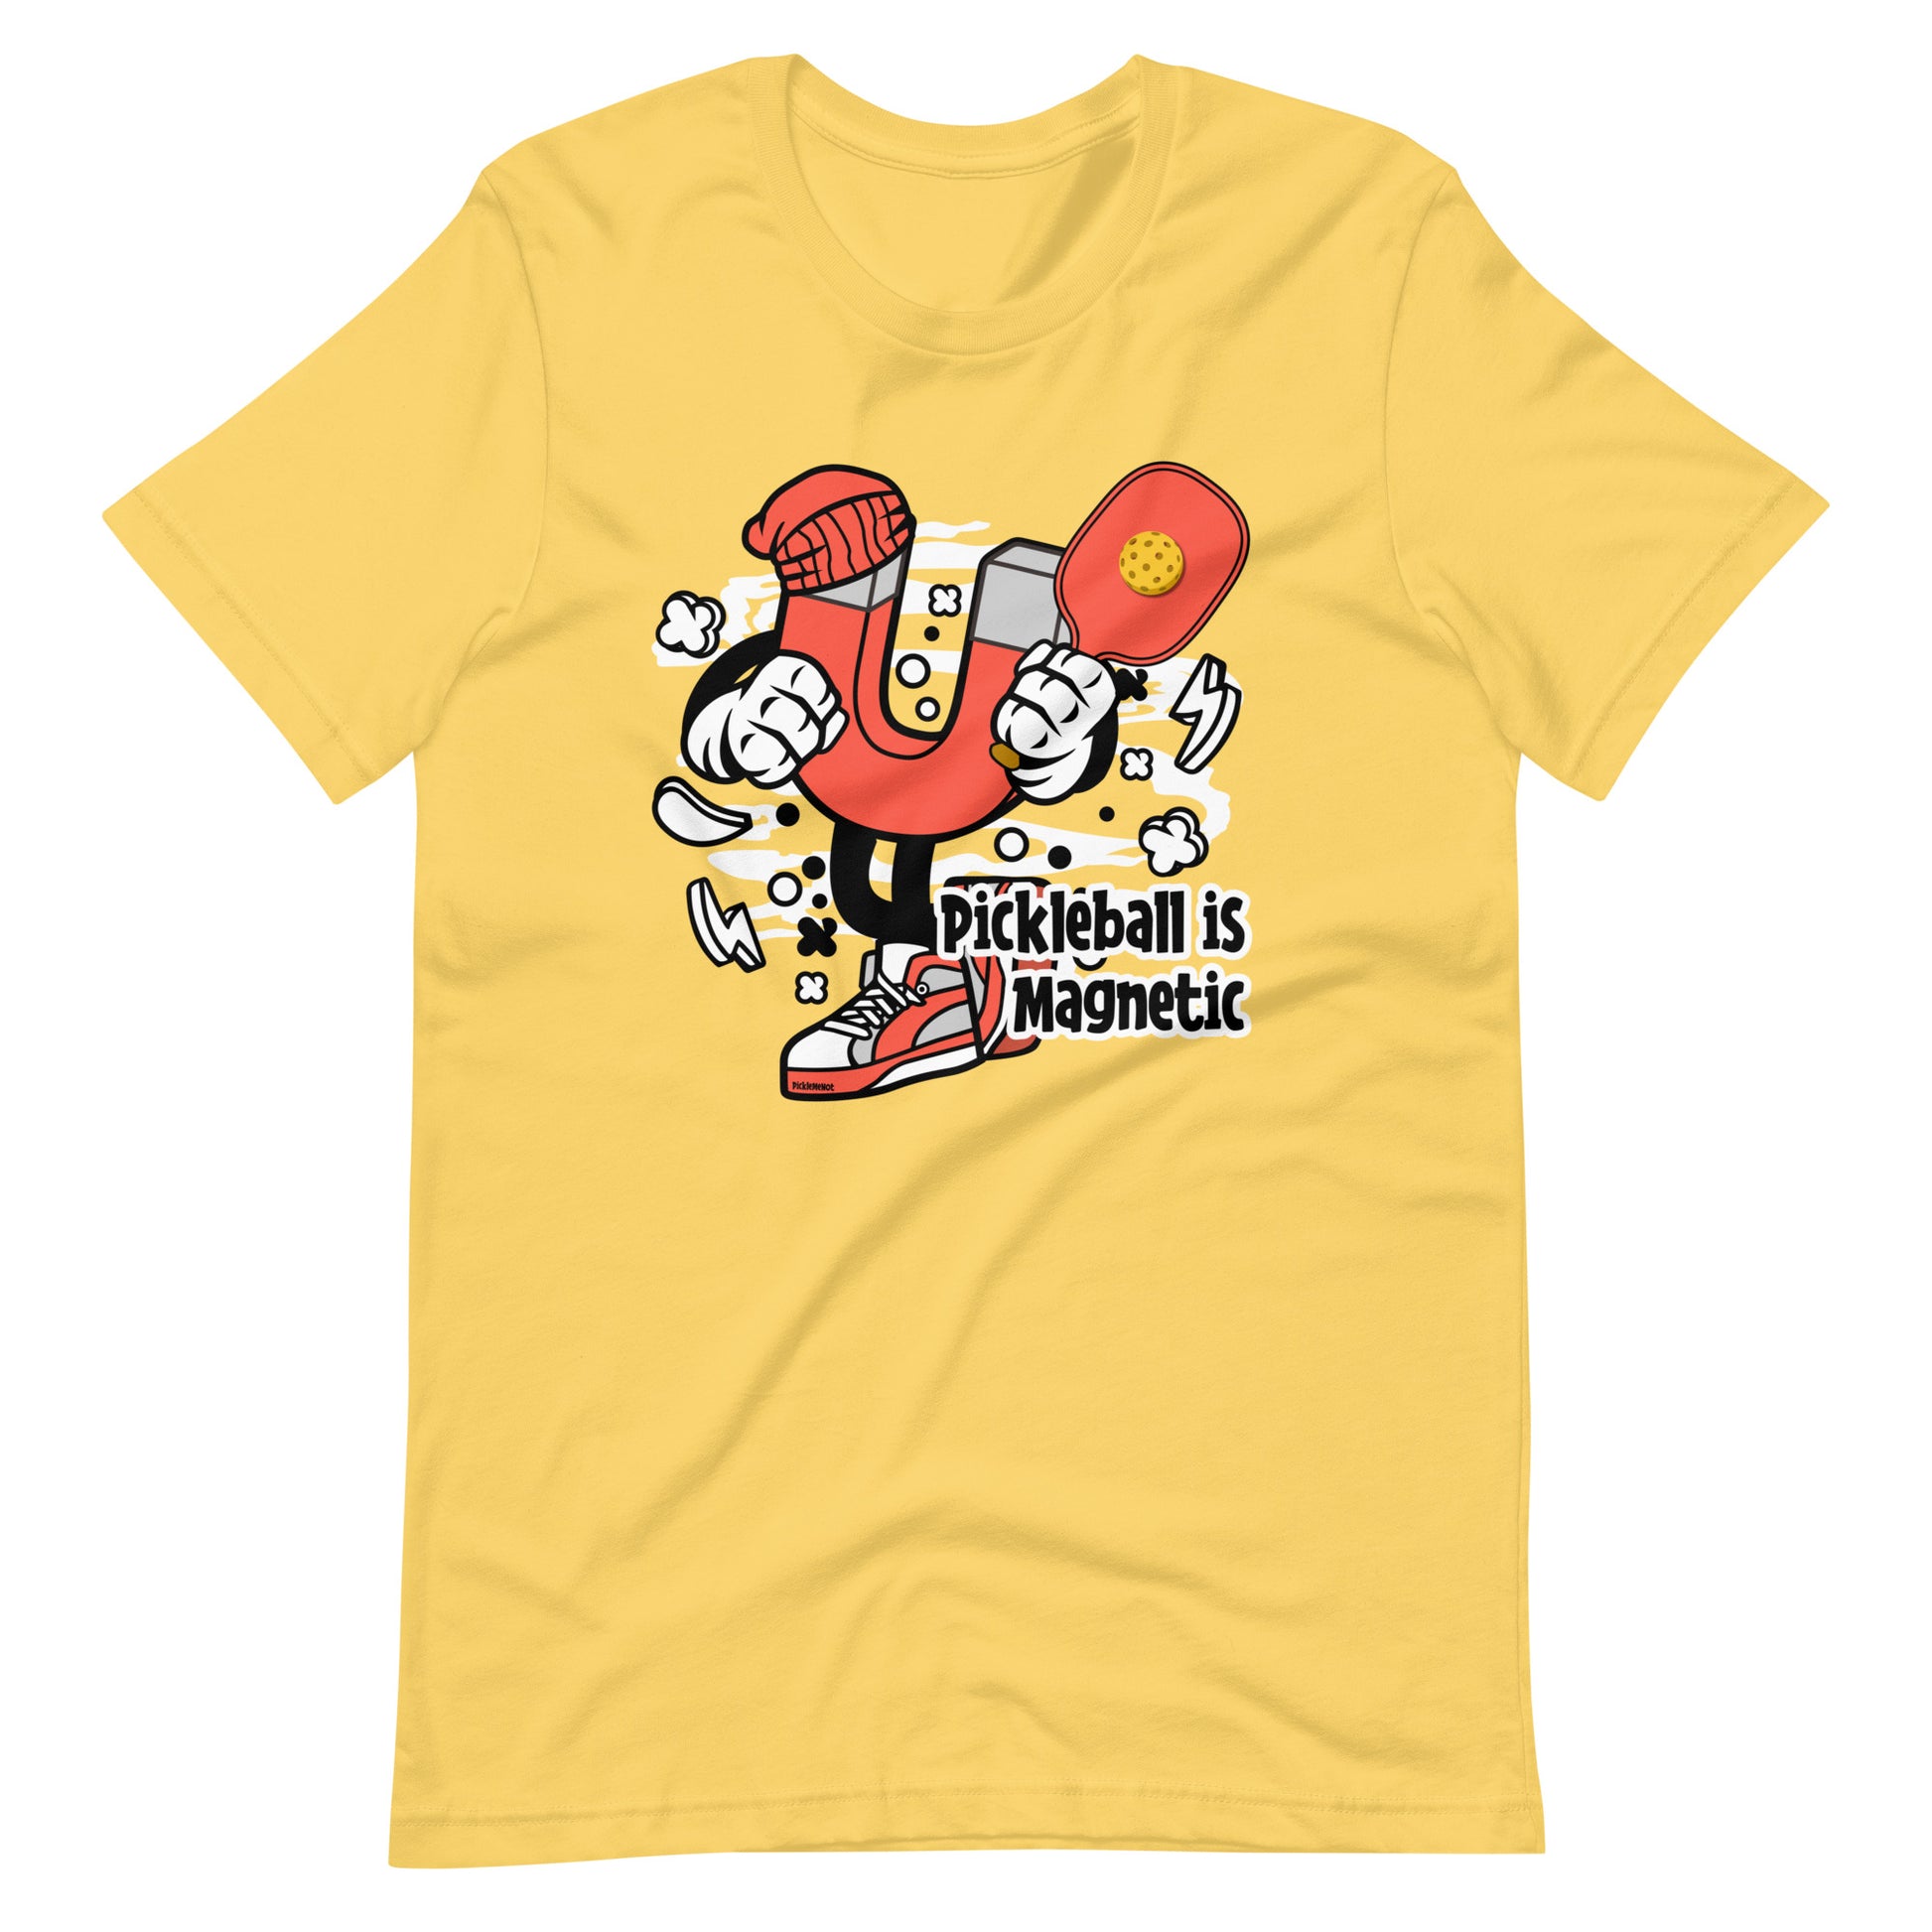 Retro-Vintage Fun Pickleball , "Pickleball is Magnetic" Unisex Women's Yellow T-Shirt